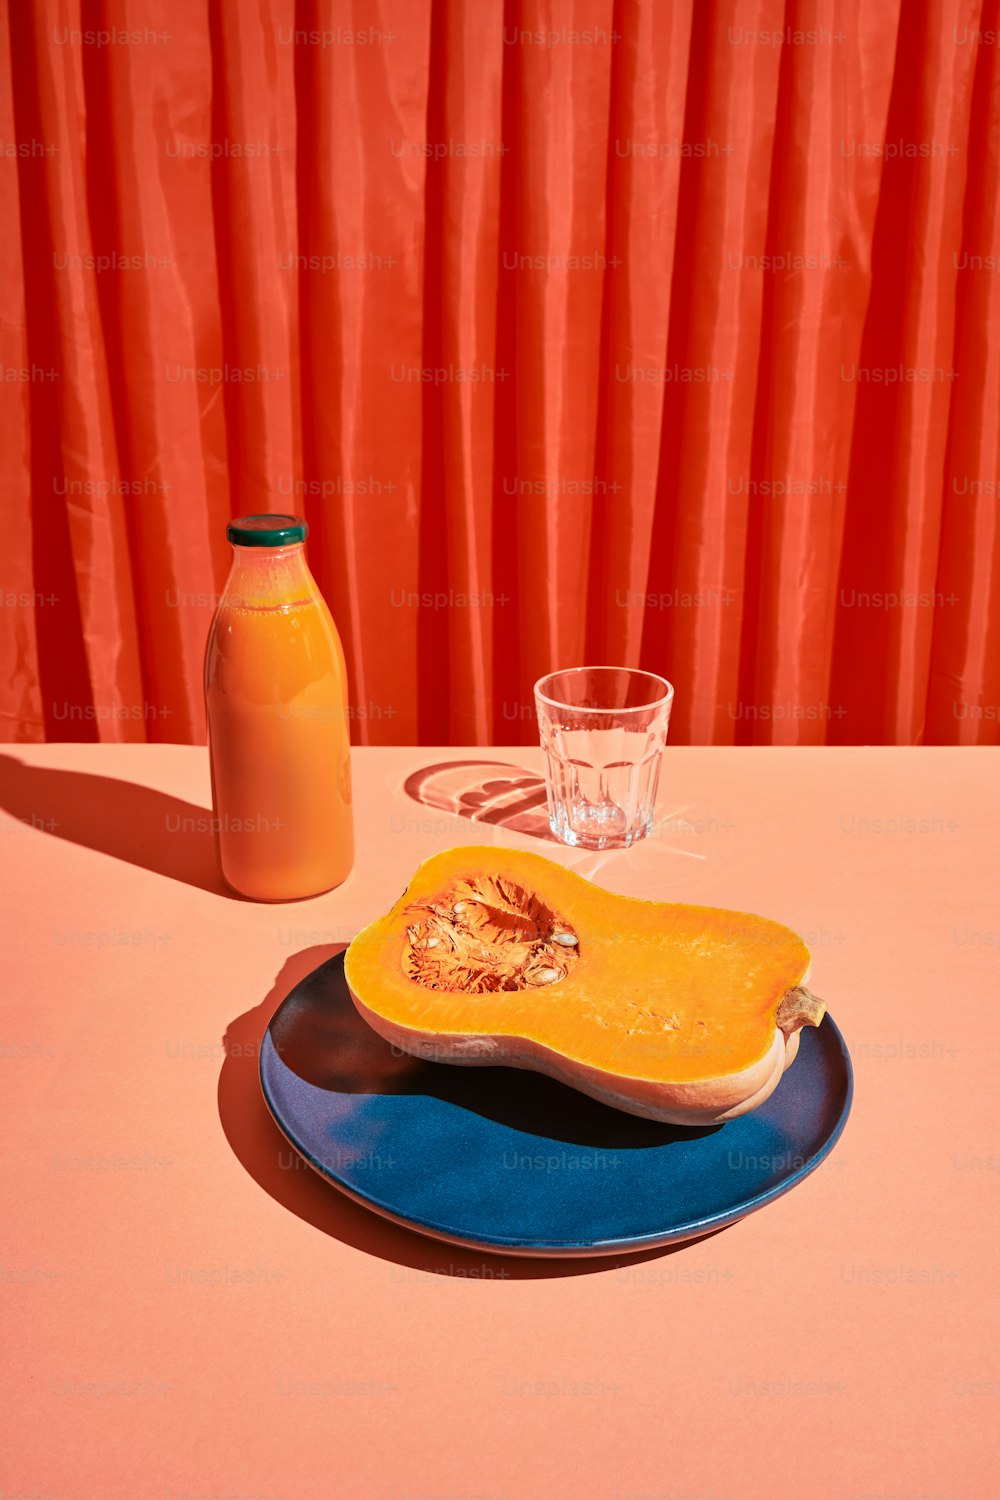 un bicchiere di succo d'arancia accanto a una zucca imburrata e imburrata